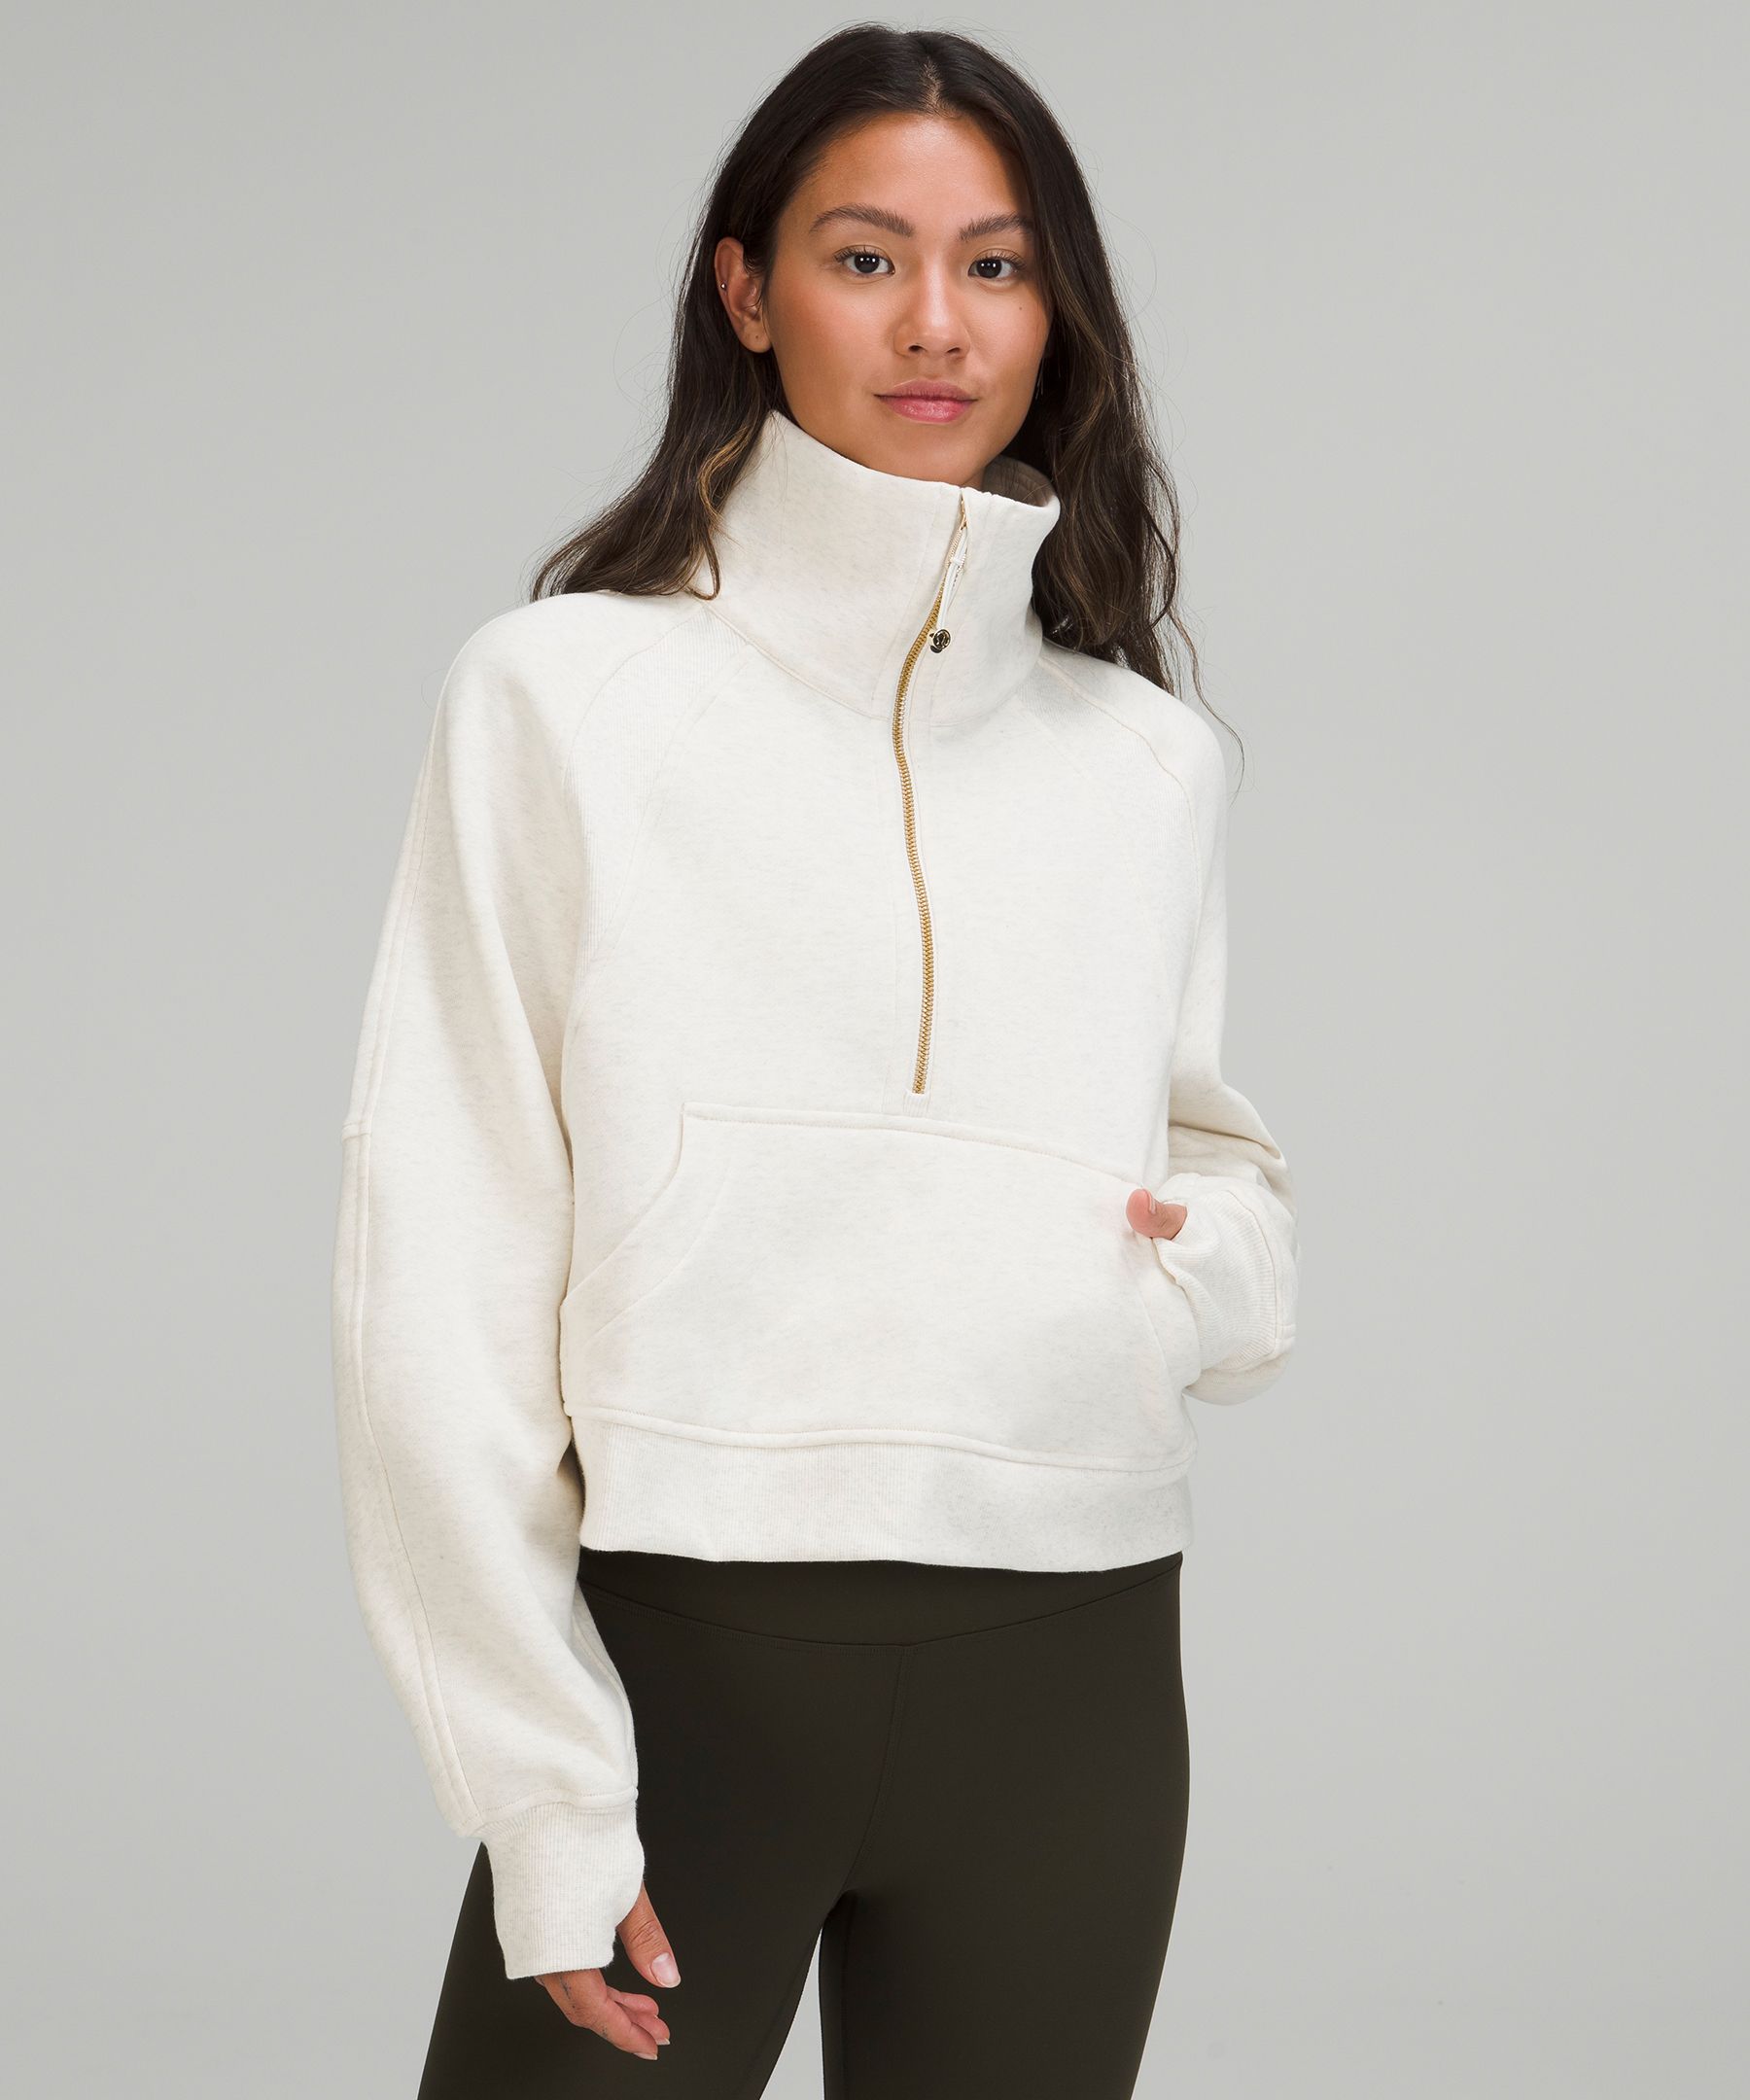 Lululemon Black Scuba Oversized Funnel Neck Half Zip Sweatshirt Size M/L  Size M - $78 (33% Off Retail) - From M